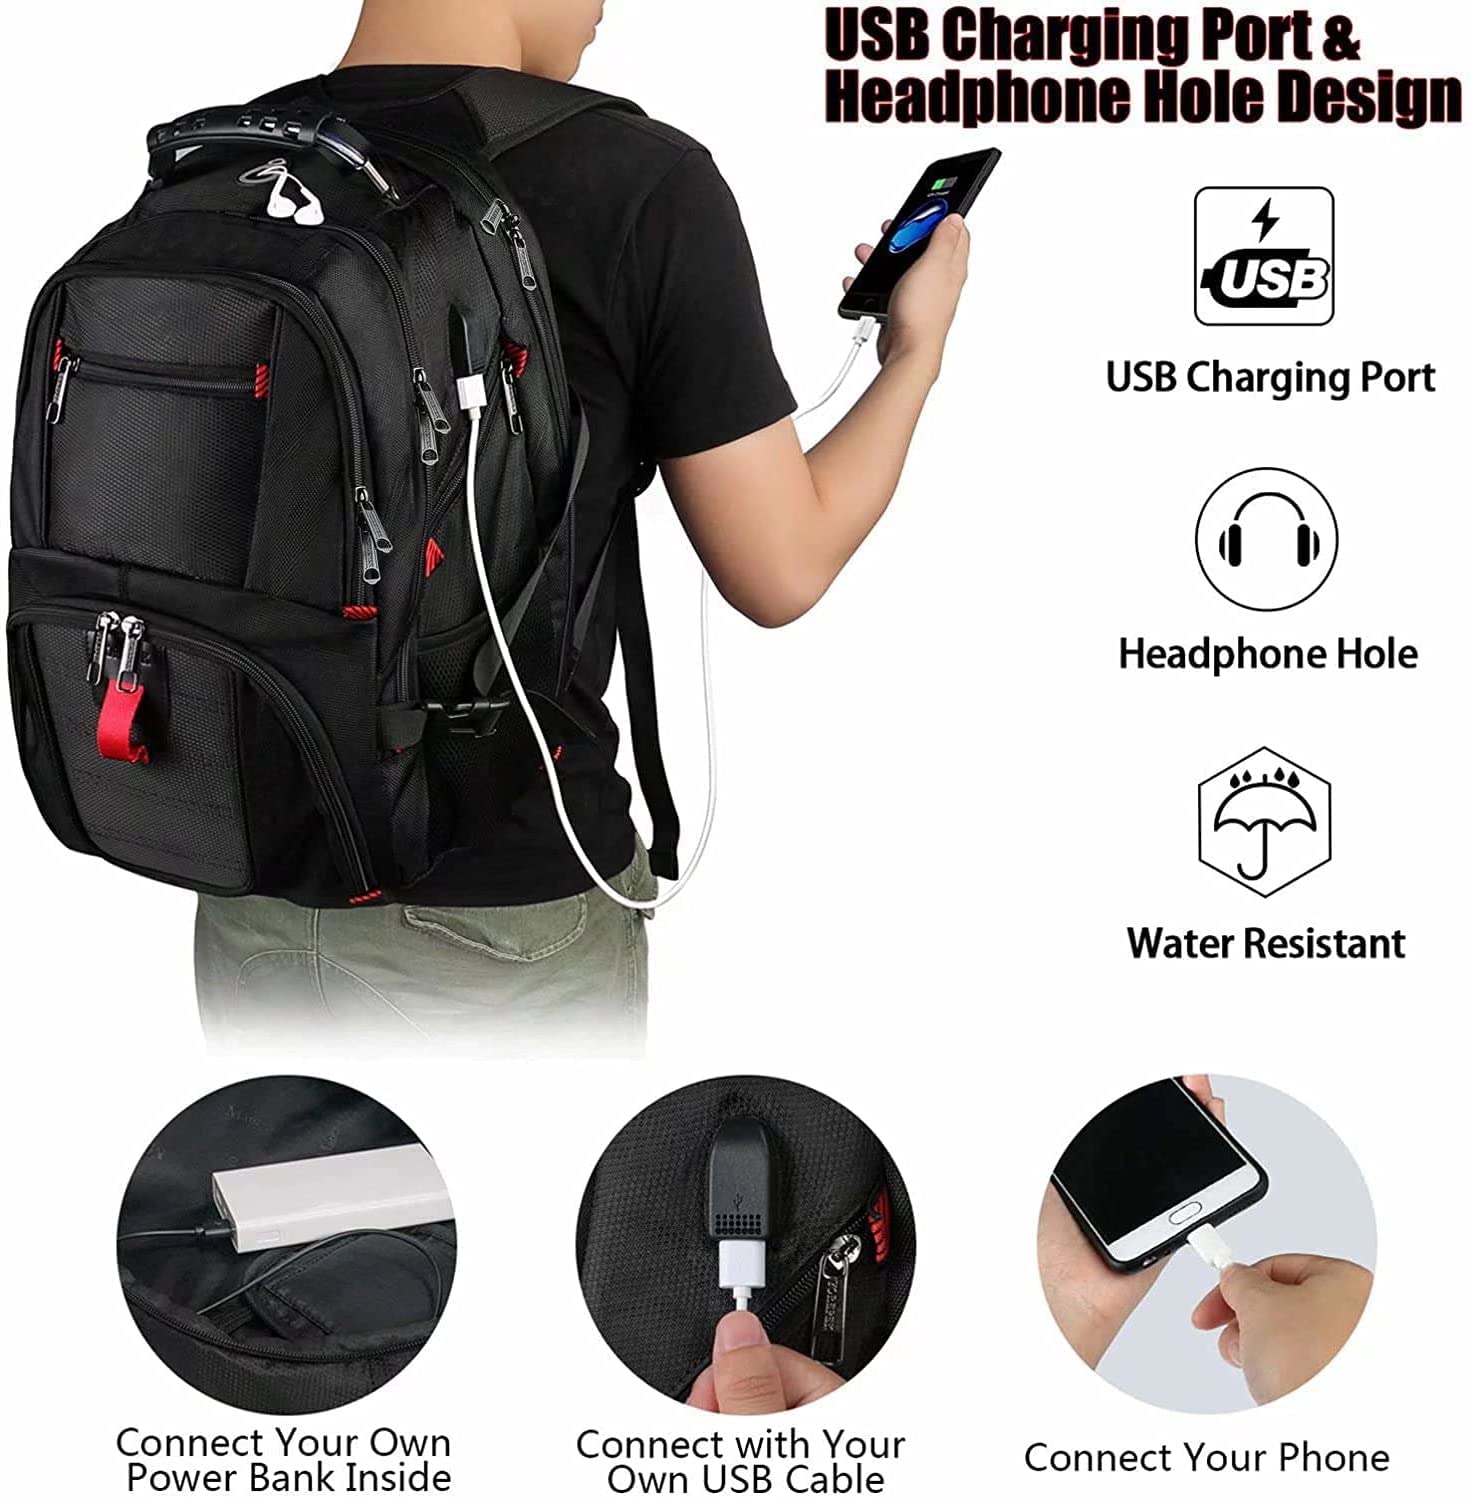 YOREPEK Travel Backpack, 50L Extra Large Laptop Backpacks for Men Women, Soccer Bag, Soccer Backpack with Ball Compartment